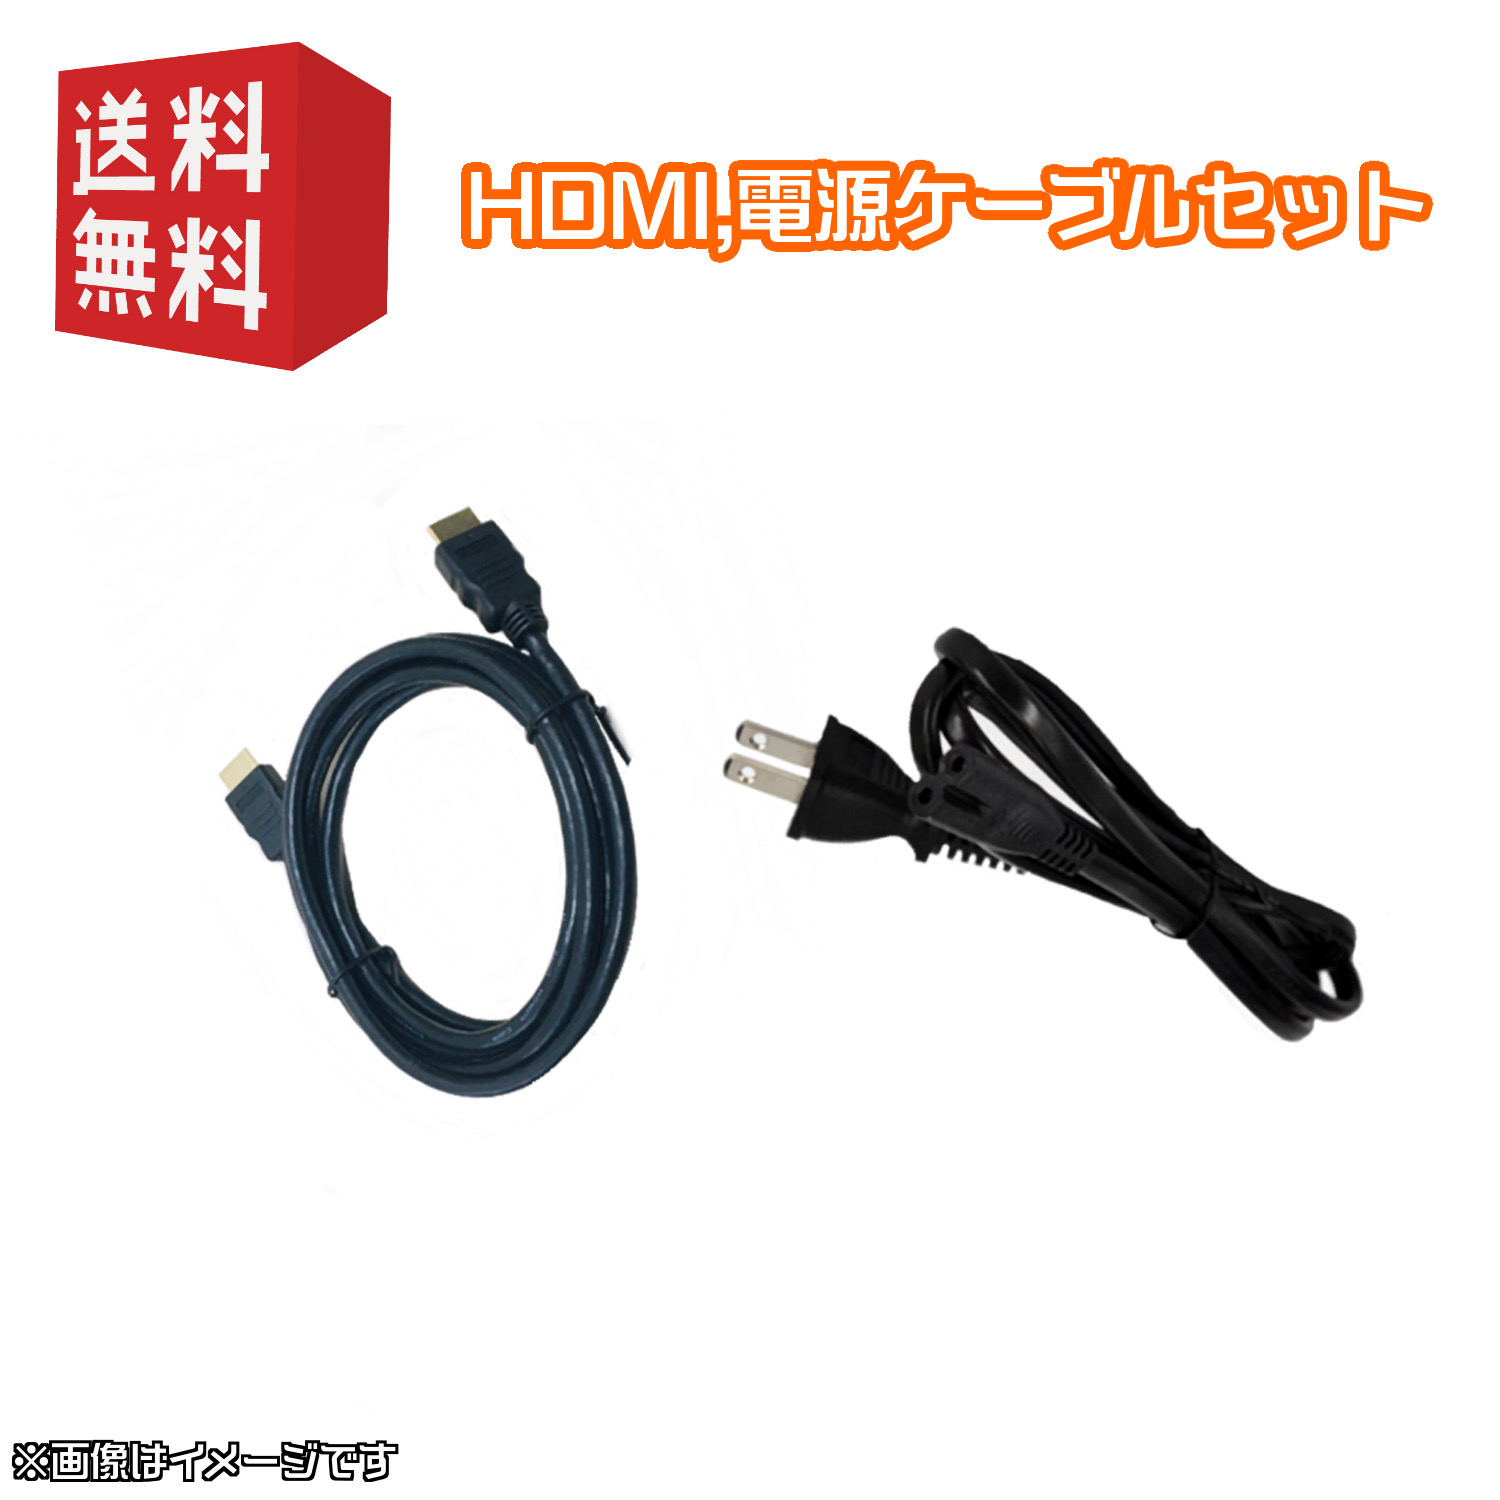 PS用 付属ケーブルセット 【 電源ケーブル(メガネ型),HDMIケーブル 